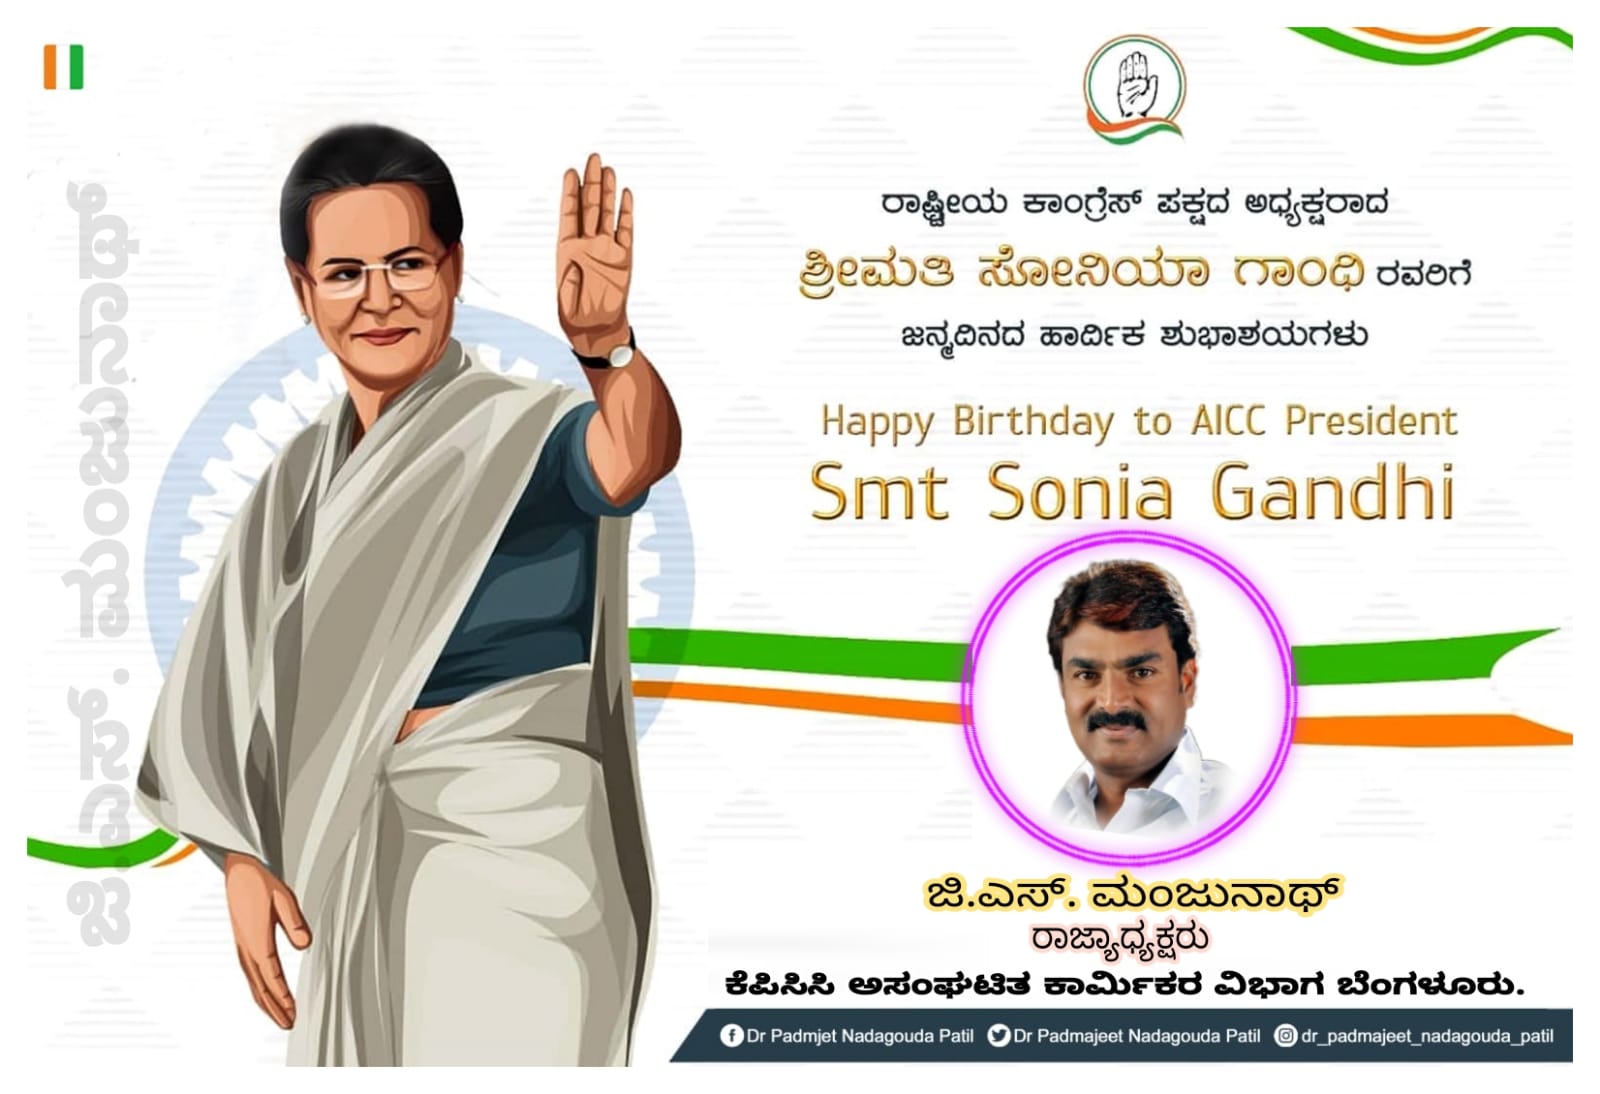 Happy Birthday to AICC President Smt Sonia Gandhi madam.   